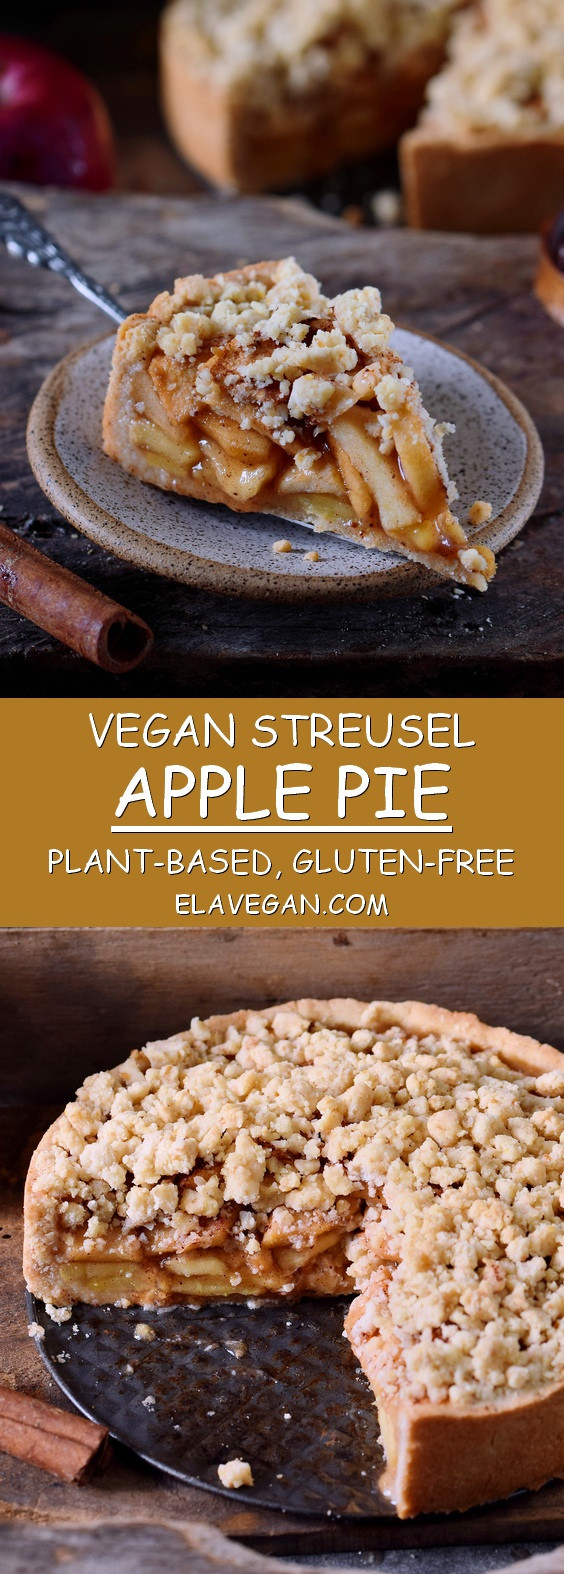 Vegan Apple Pie
 Vegan Apple Pie with Streusel